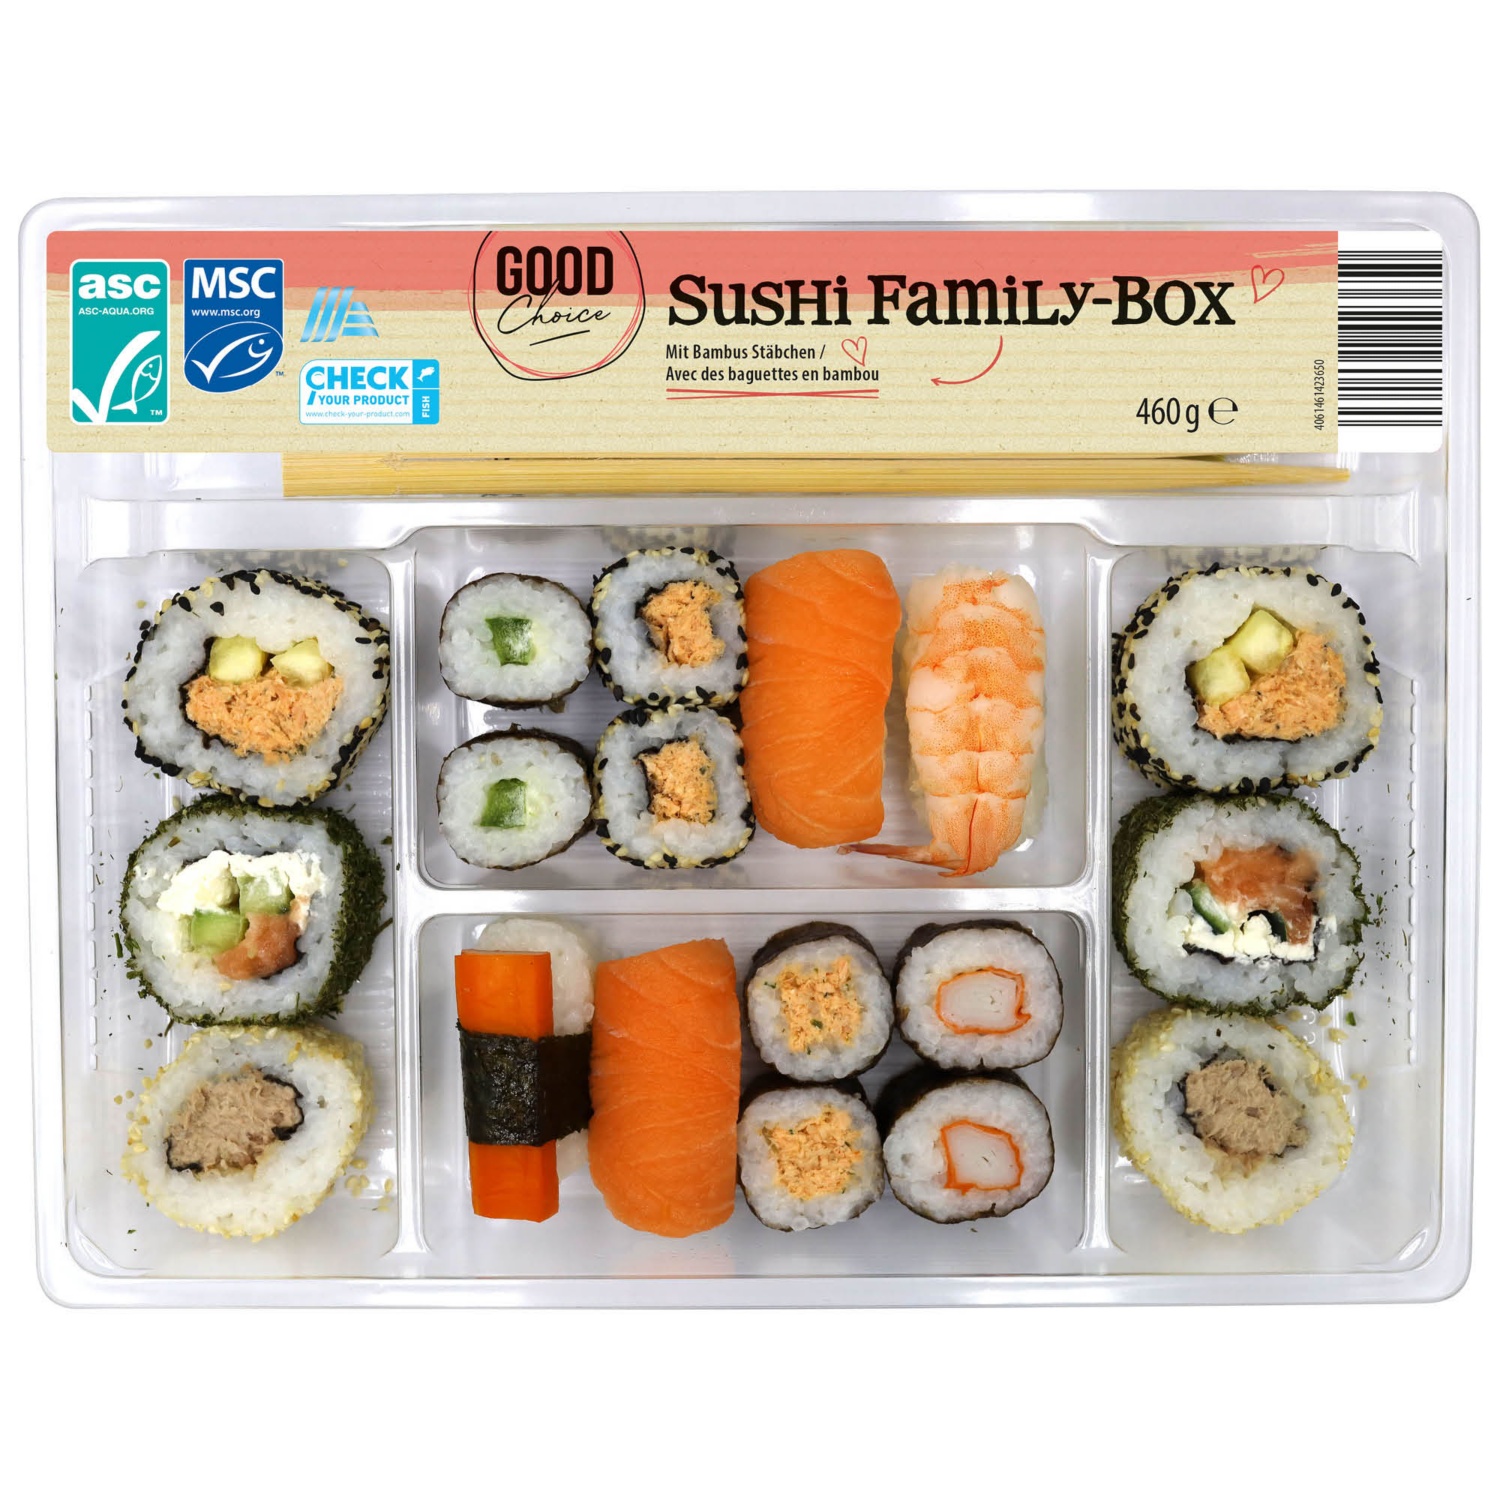 GOOD CHOICE Sushi Family Box